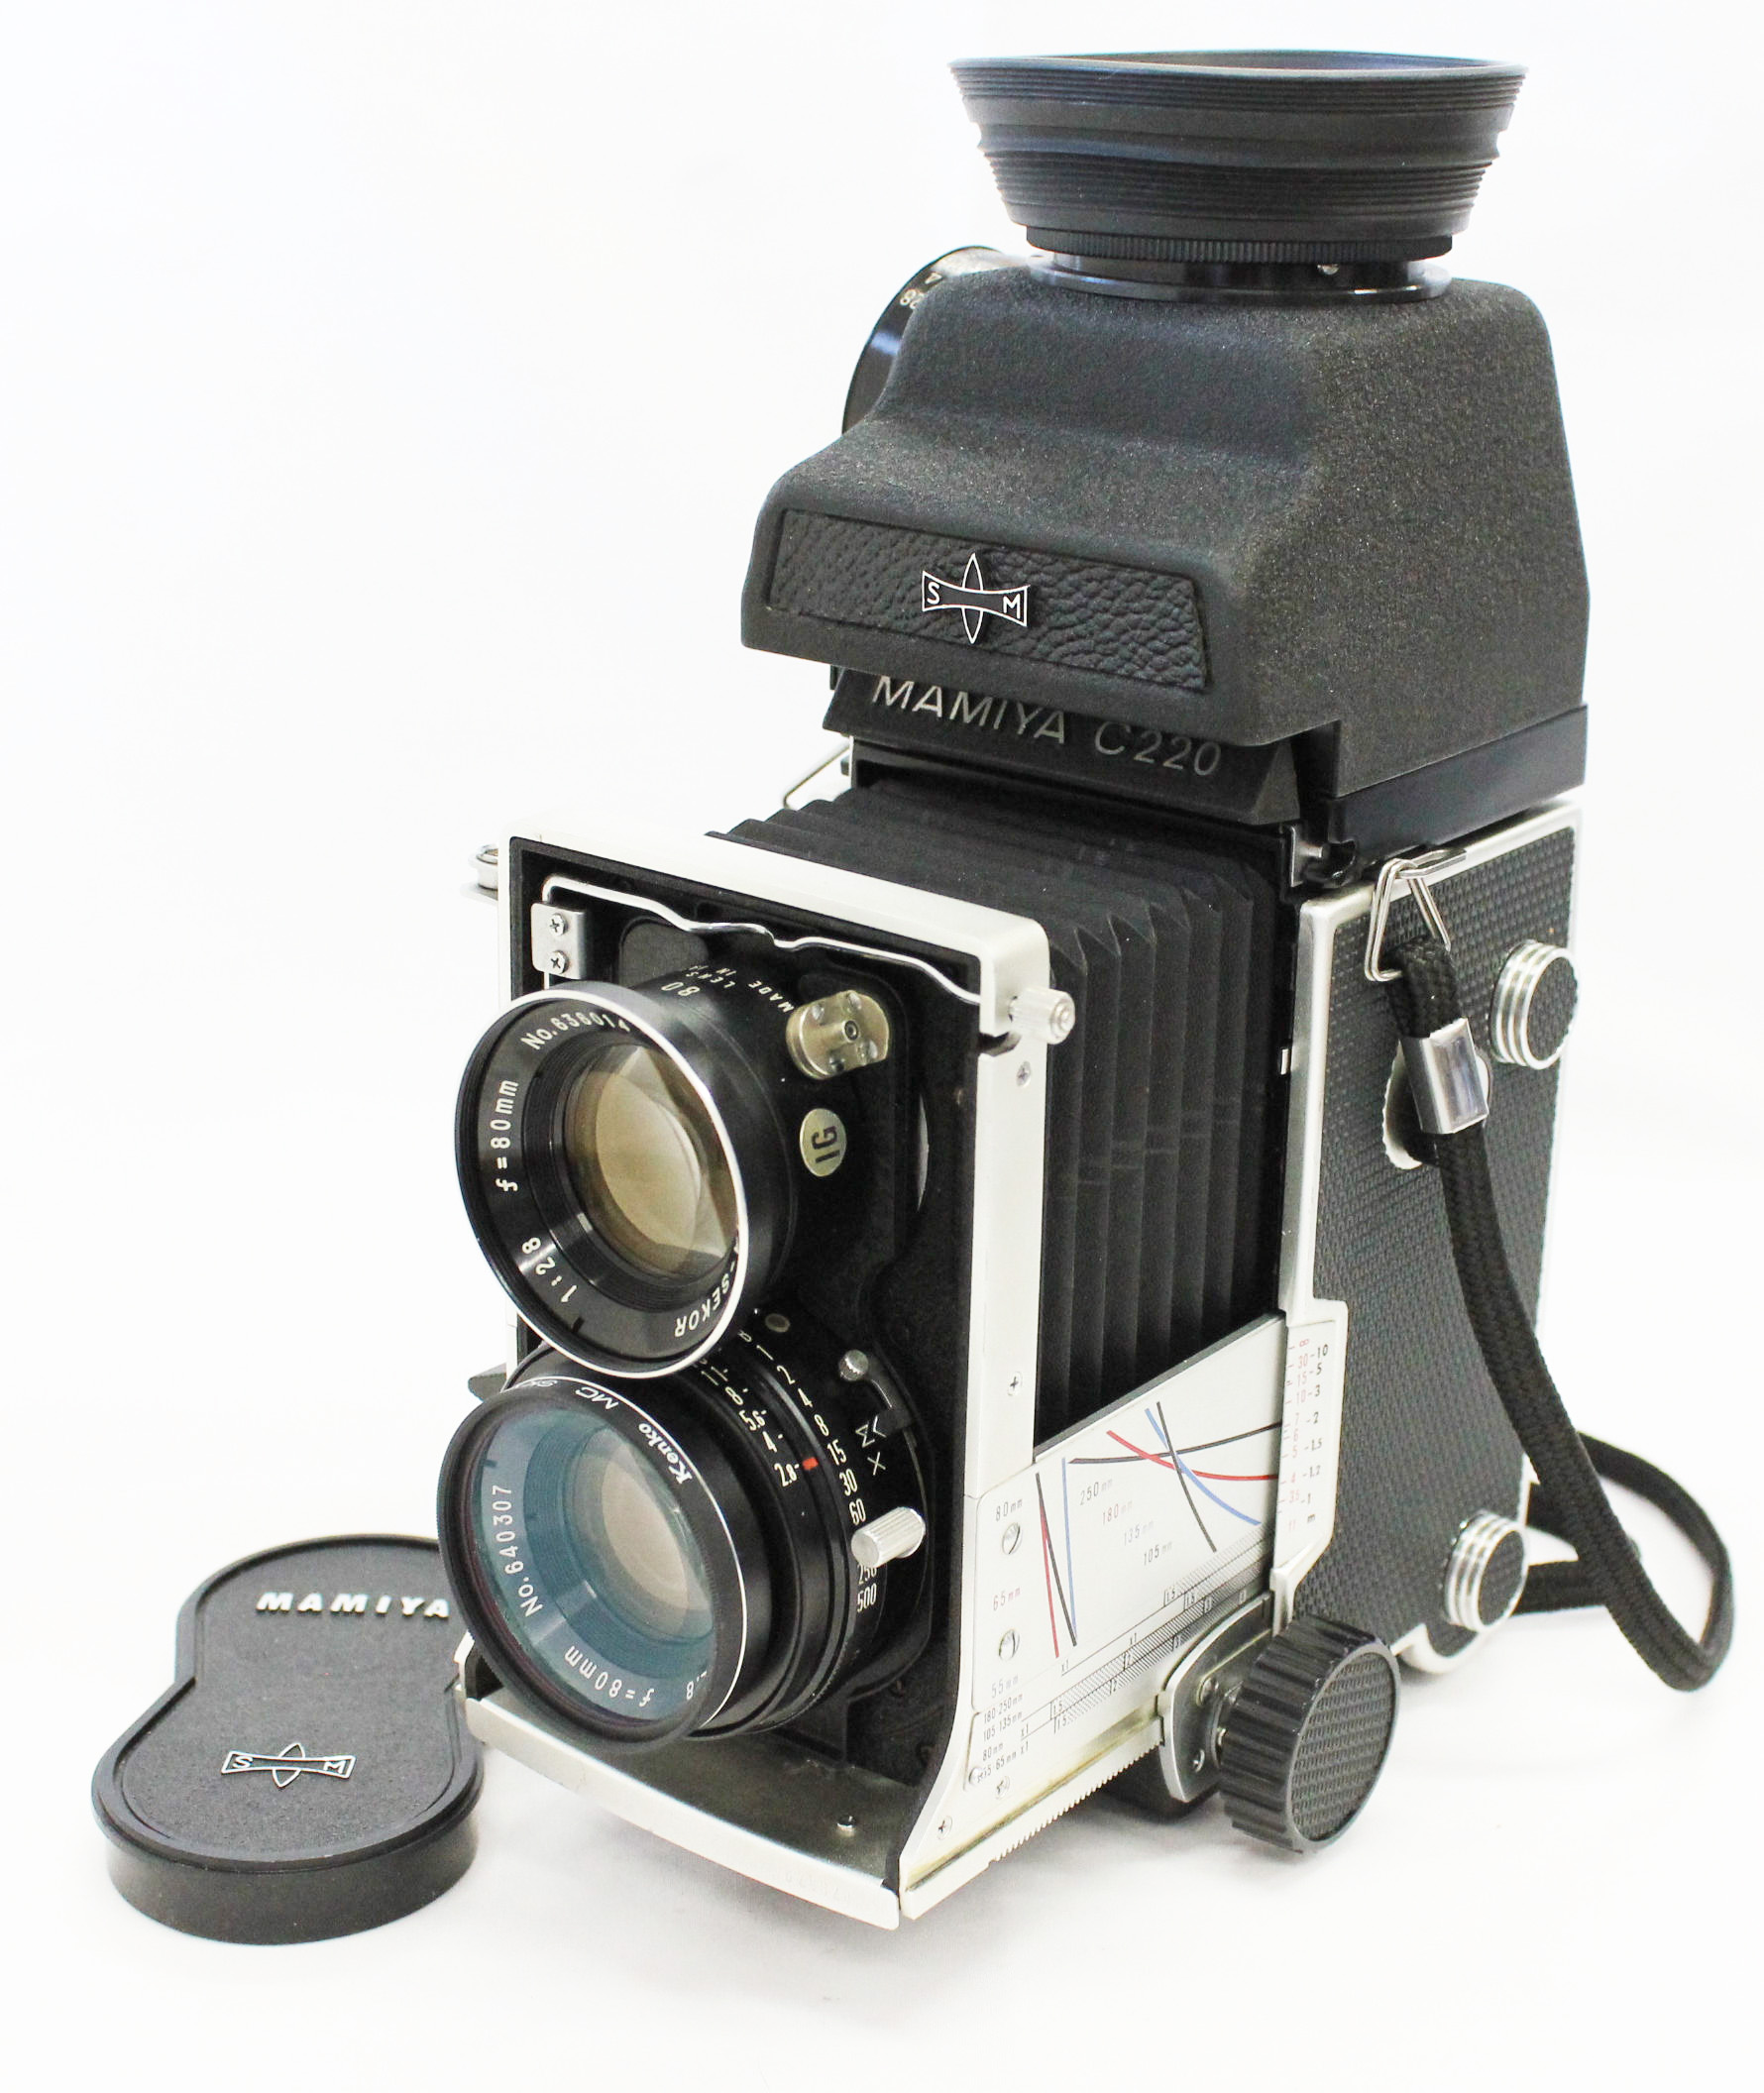 Mamiya C220 Pro TLR Medium Format Camera with 80mm F2.8 and CdS